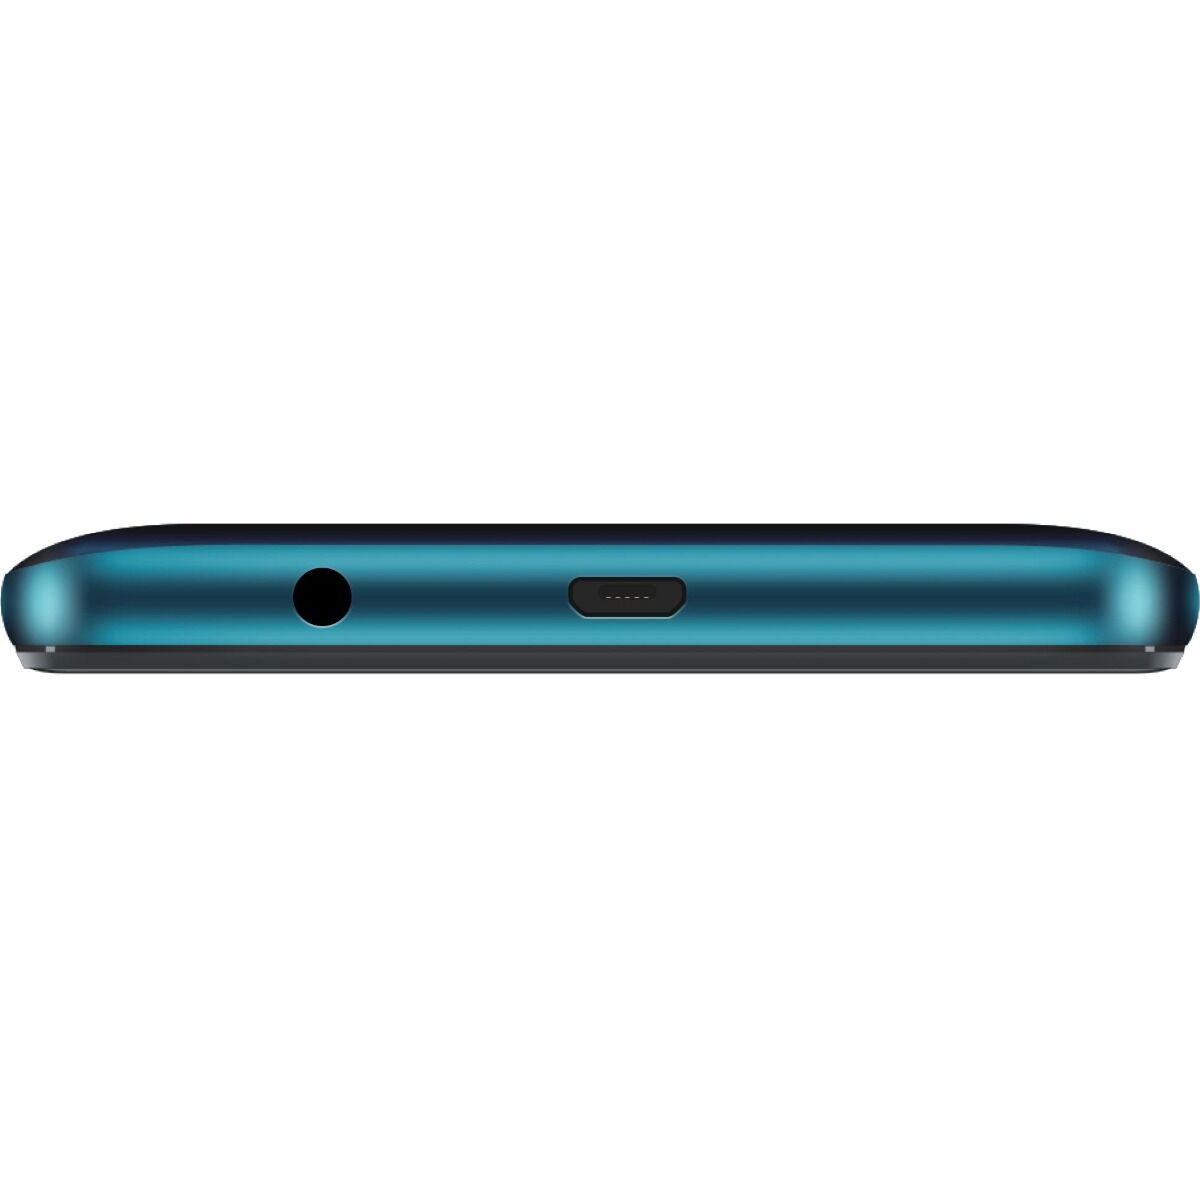 Smartphone Allview A10 Max, Dual SIM, 16GB, 3G, 5.9 inch, Turcoaz